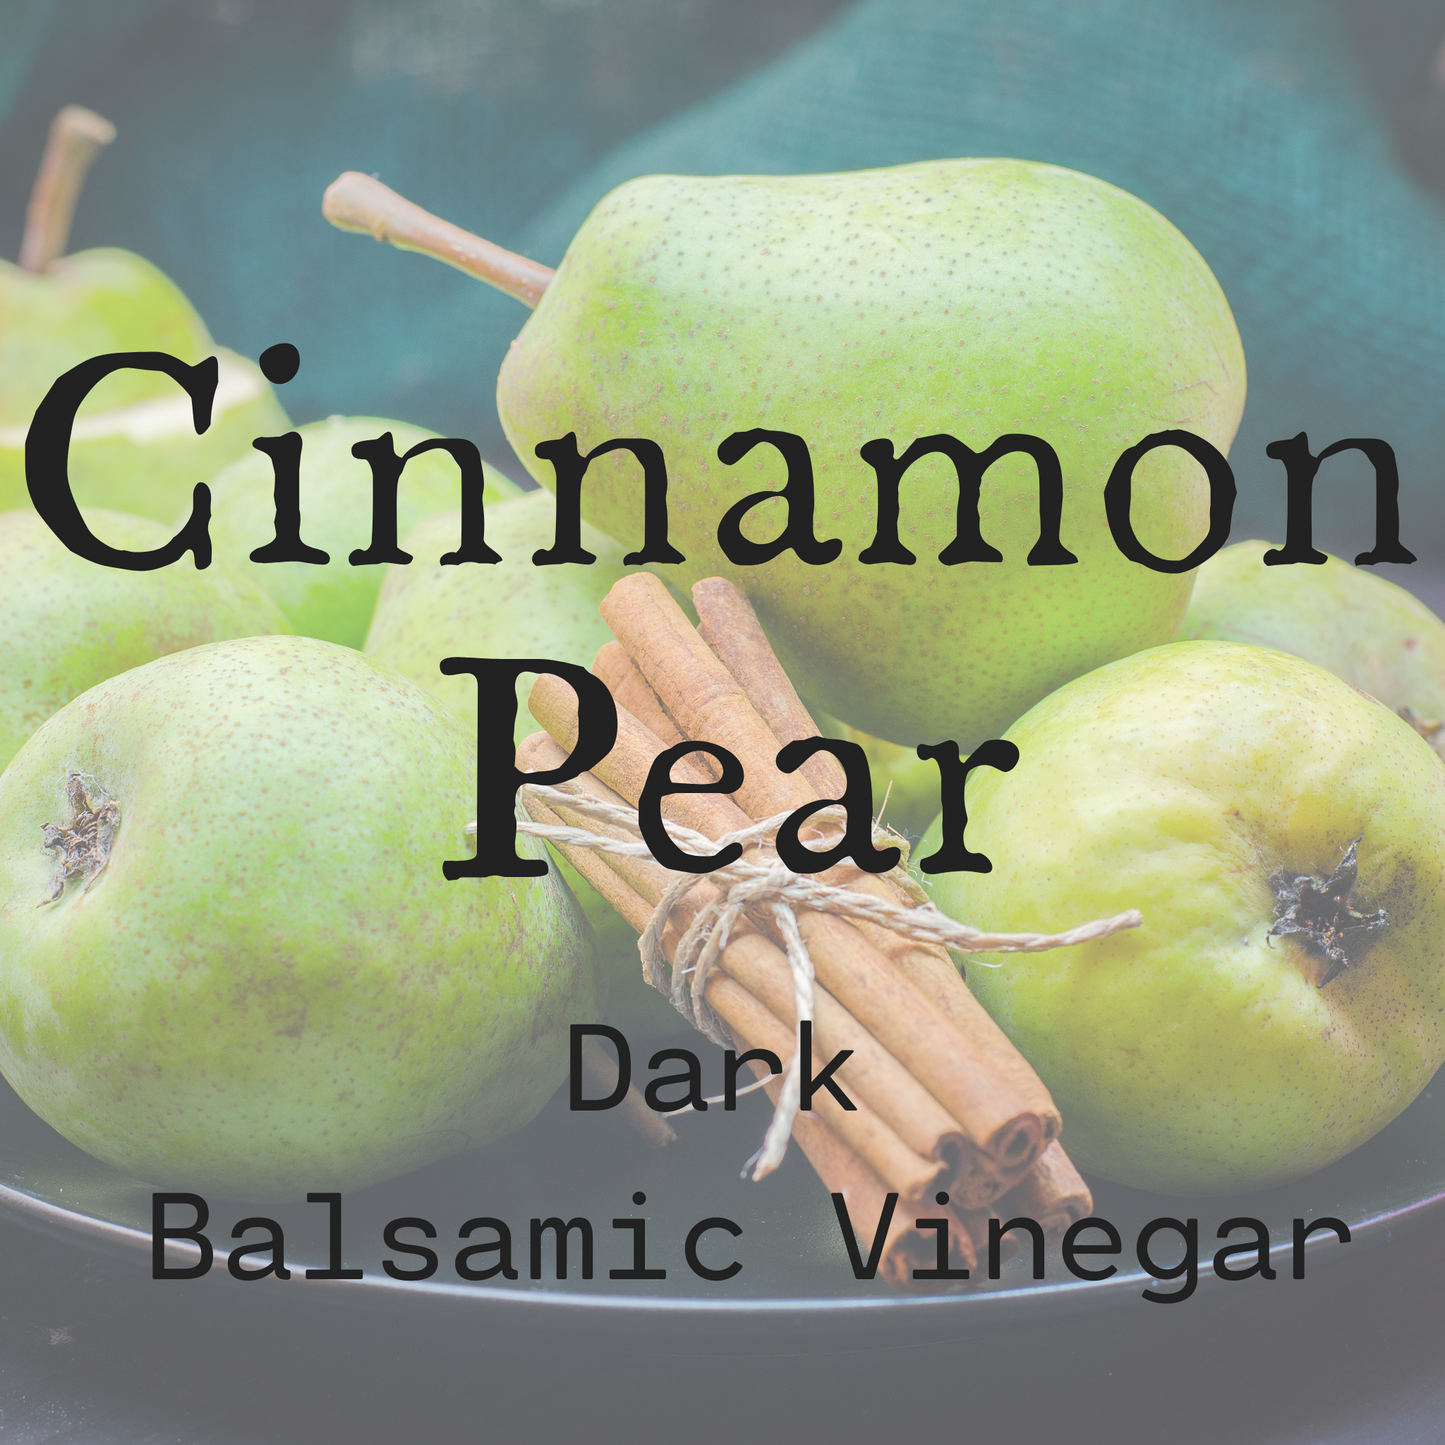 Cinnamon Pear Dark Balsamic Vinegar